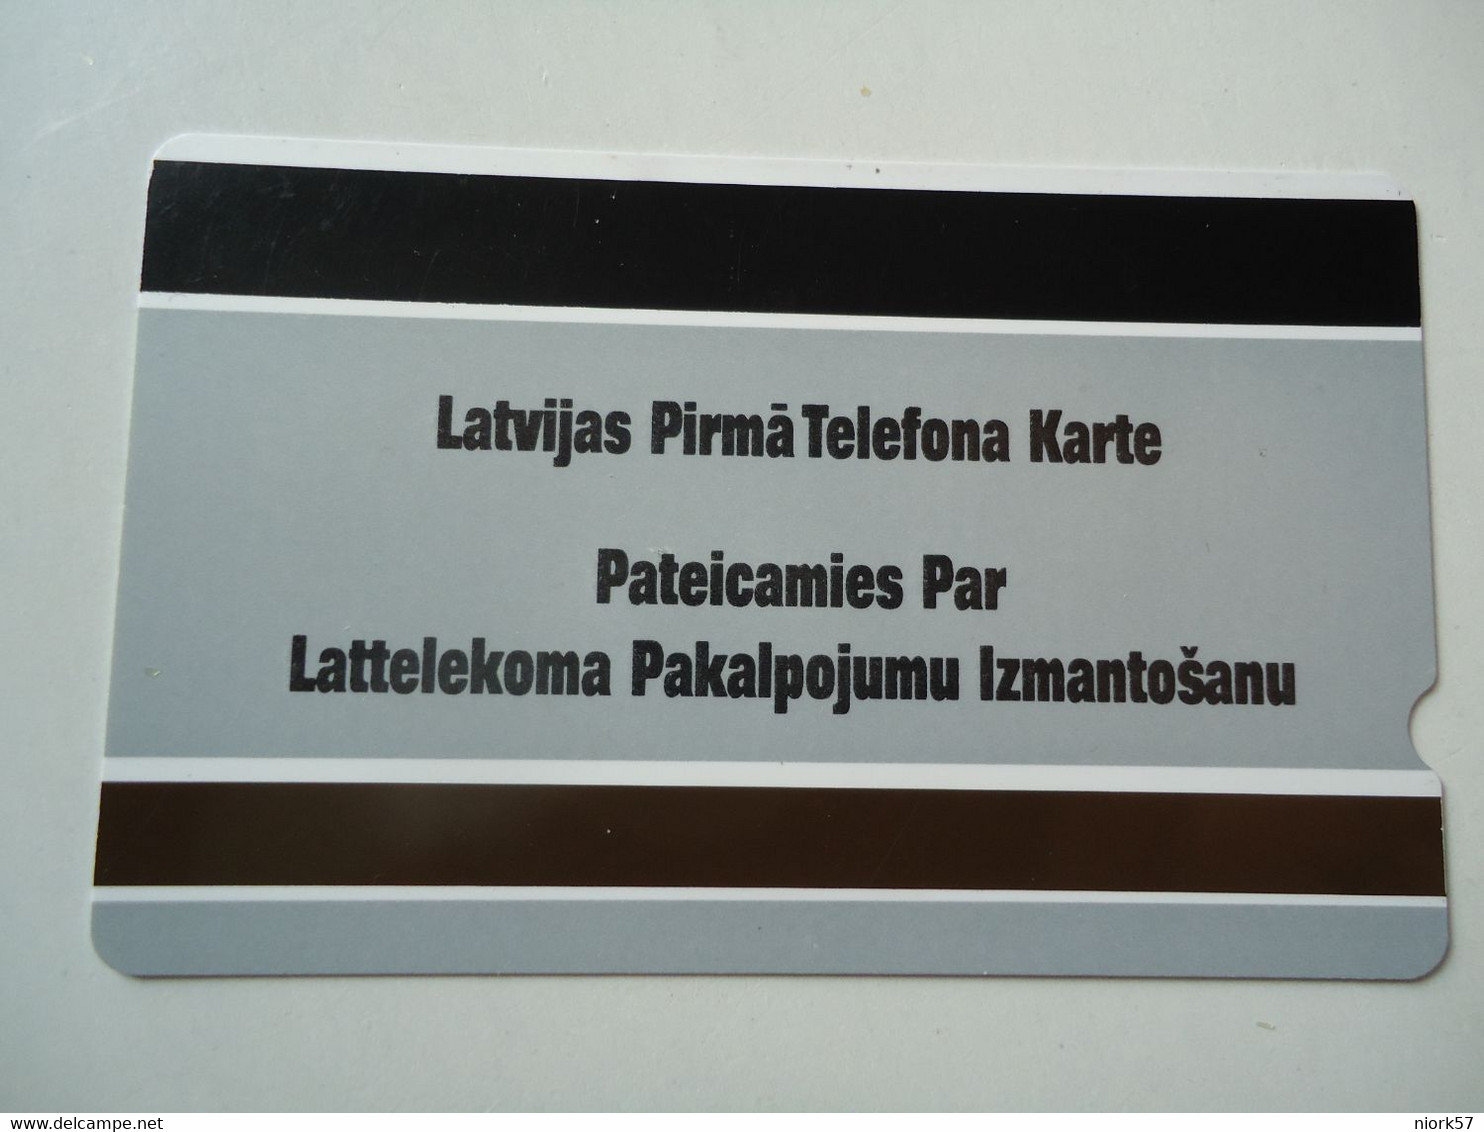 LATVIA USED CARDS MAGNETIC LANDSCAPES  2 SCAN - Latvia